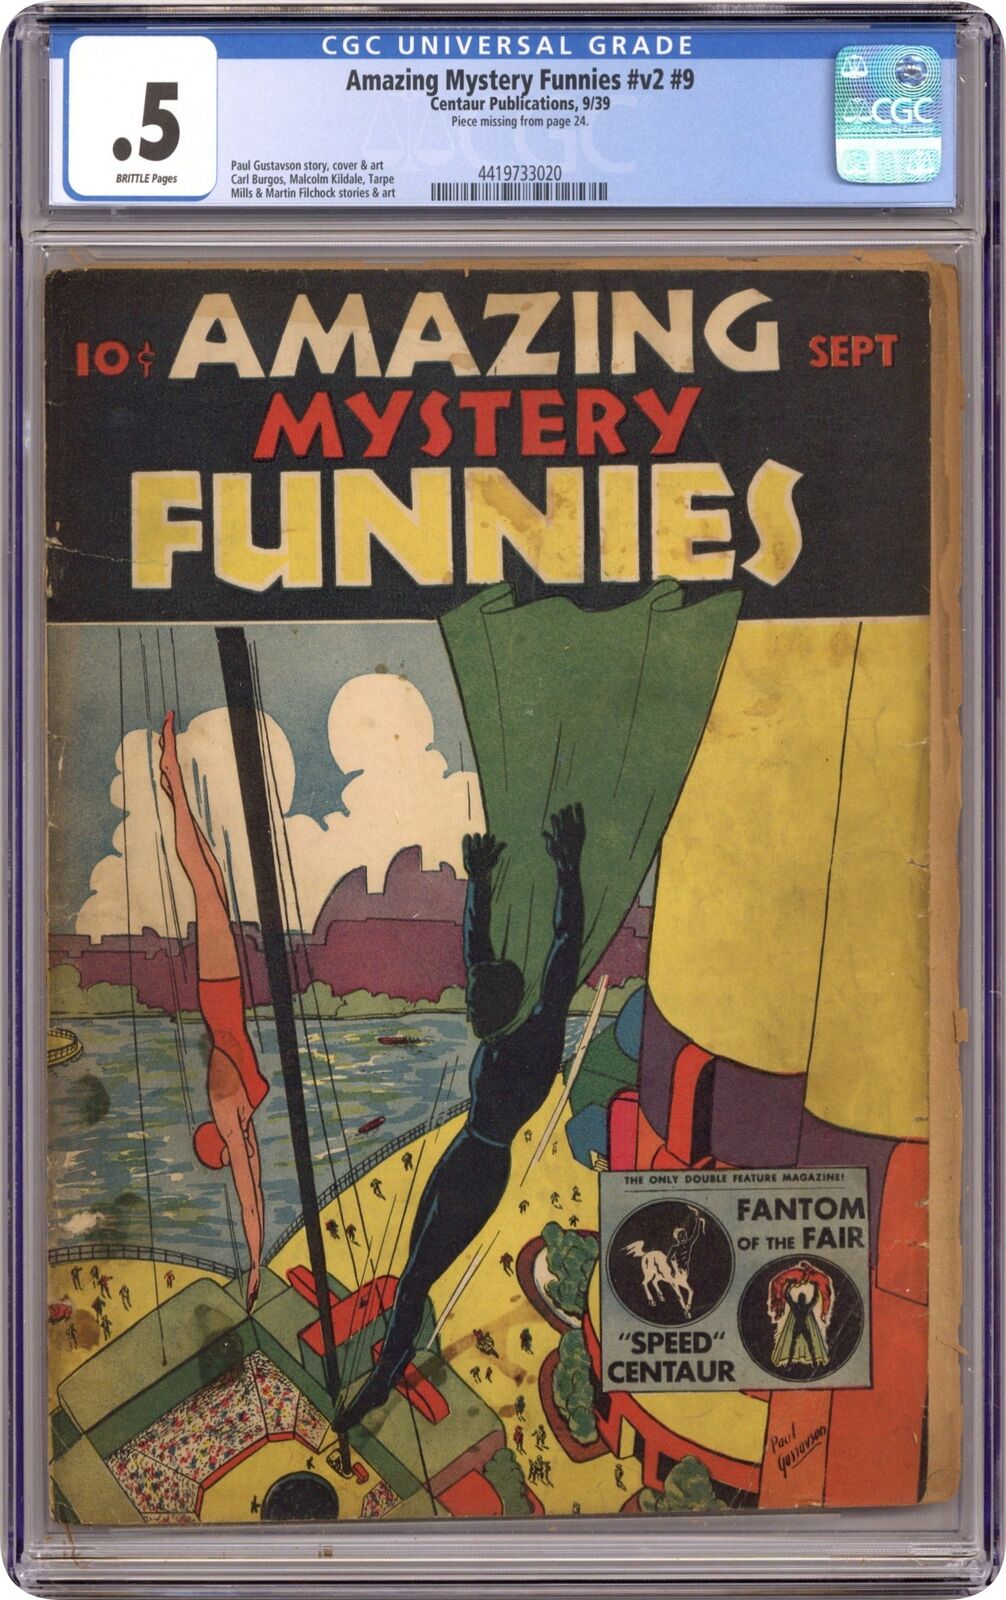 Amazing Mystery Funnies #13 CGC 0.5 1939 4419733020